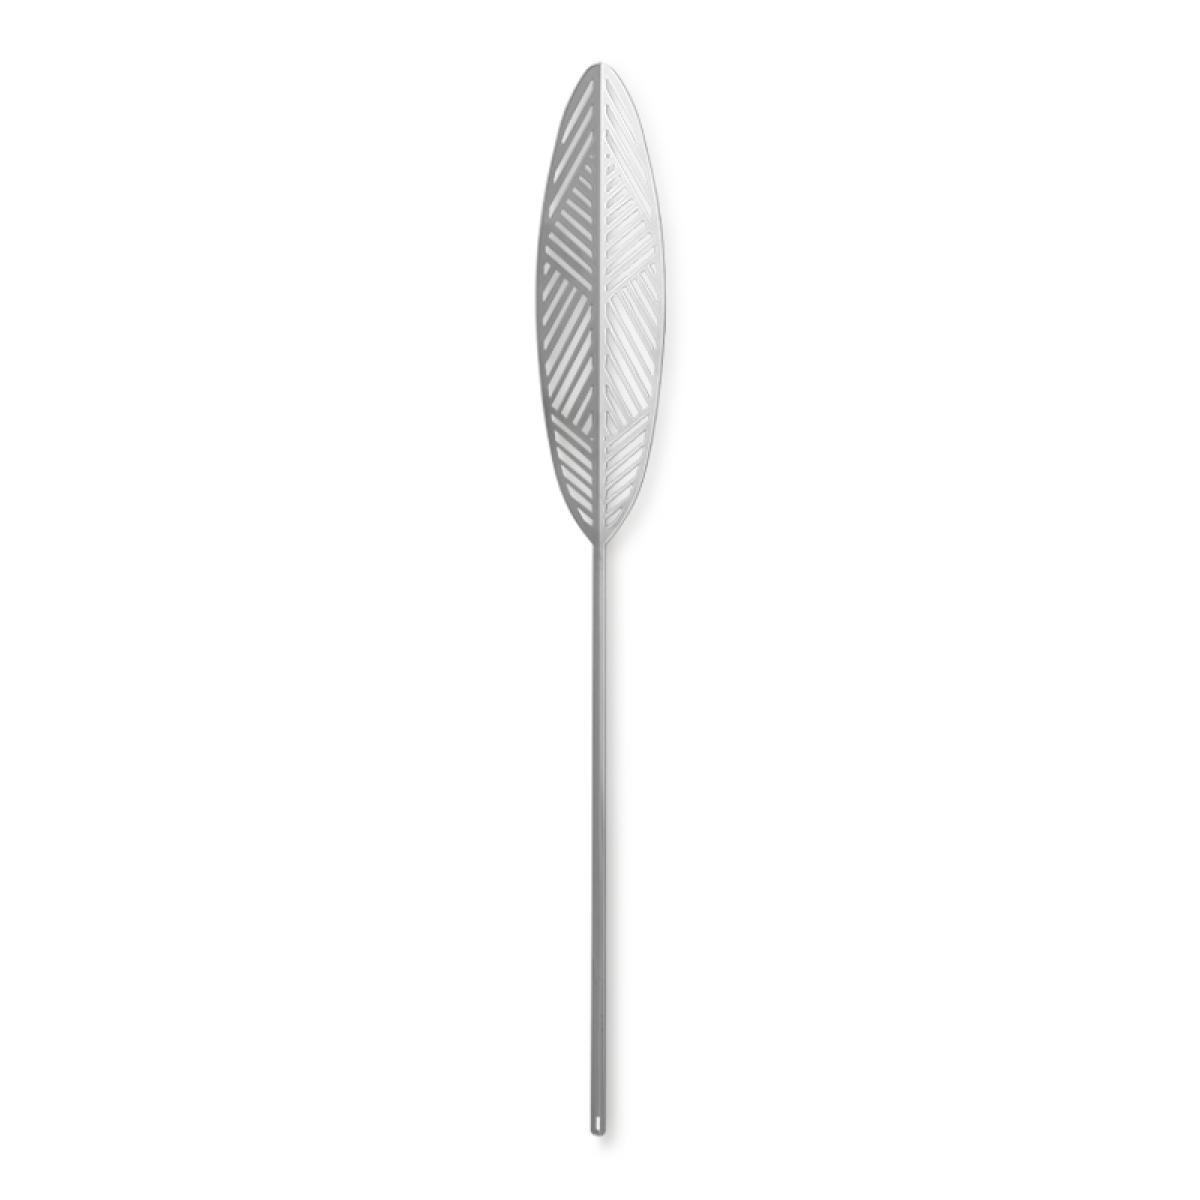 Lucie Kaas Leafike Silva Metal Blade Chrome, 41 cm